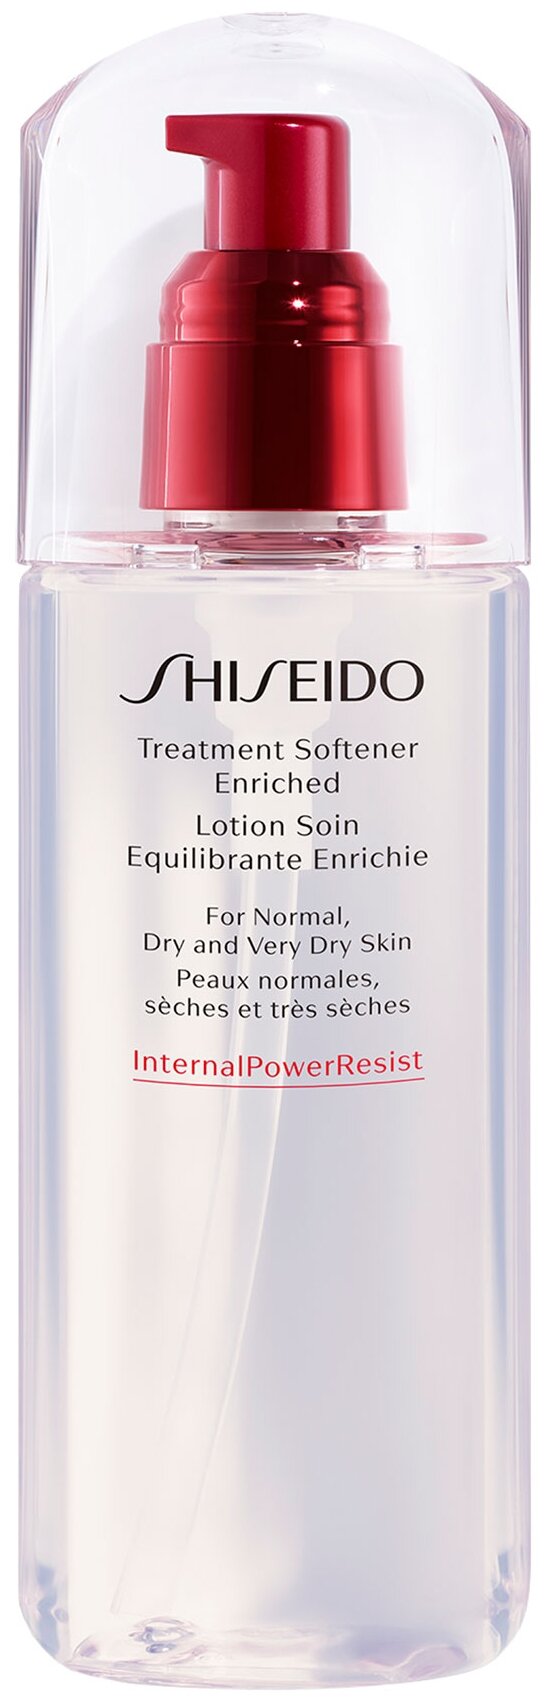 Shiseido Софтнер увлажняющий обогащенный Internal Power Resist, 150 мл